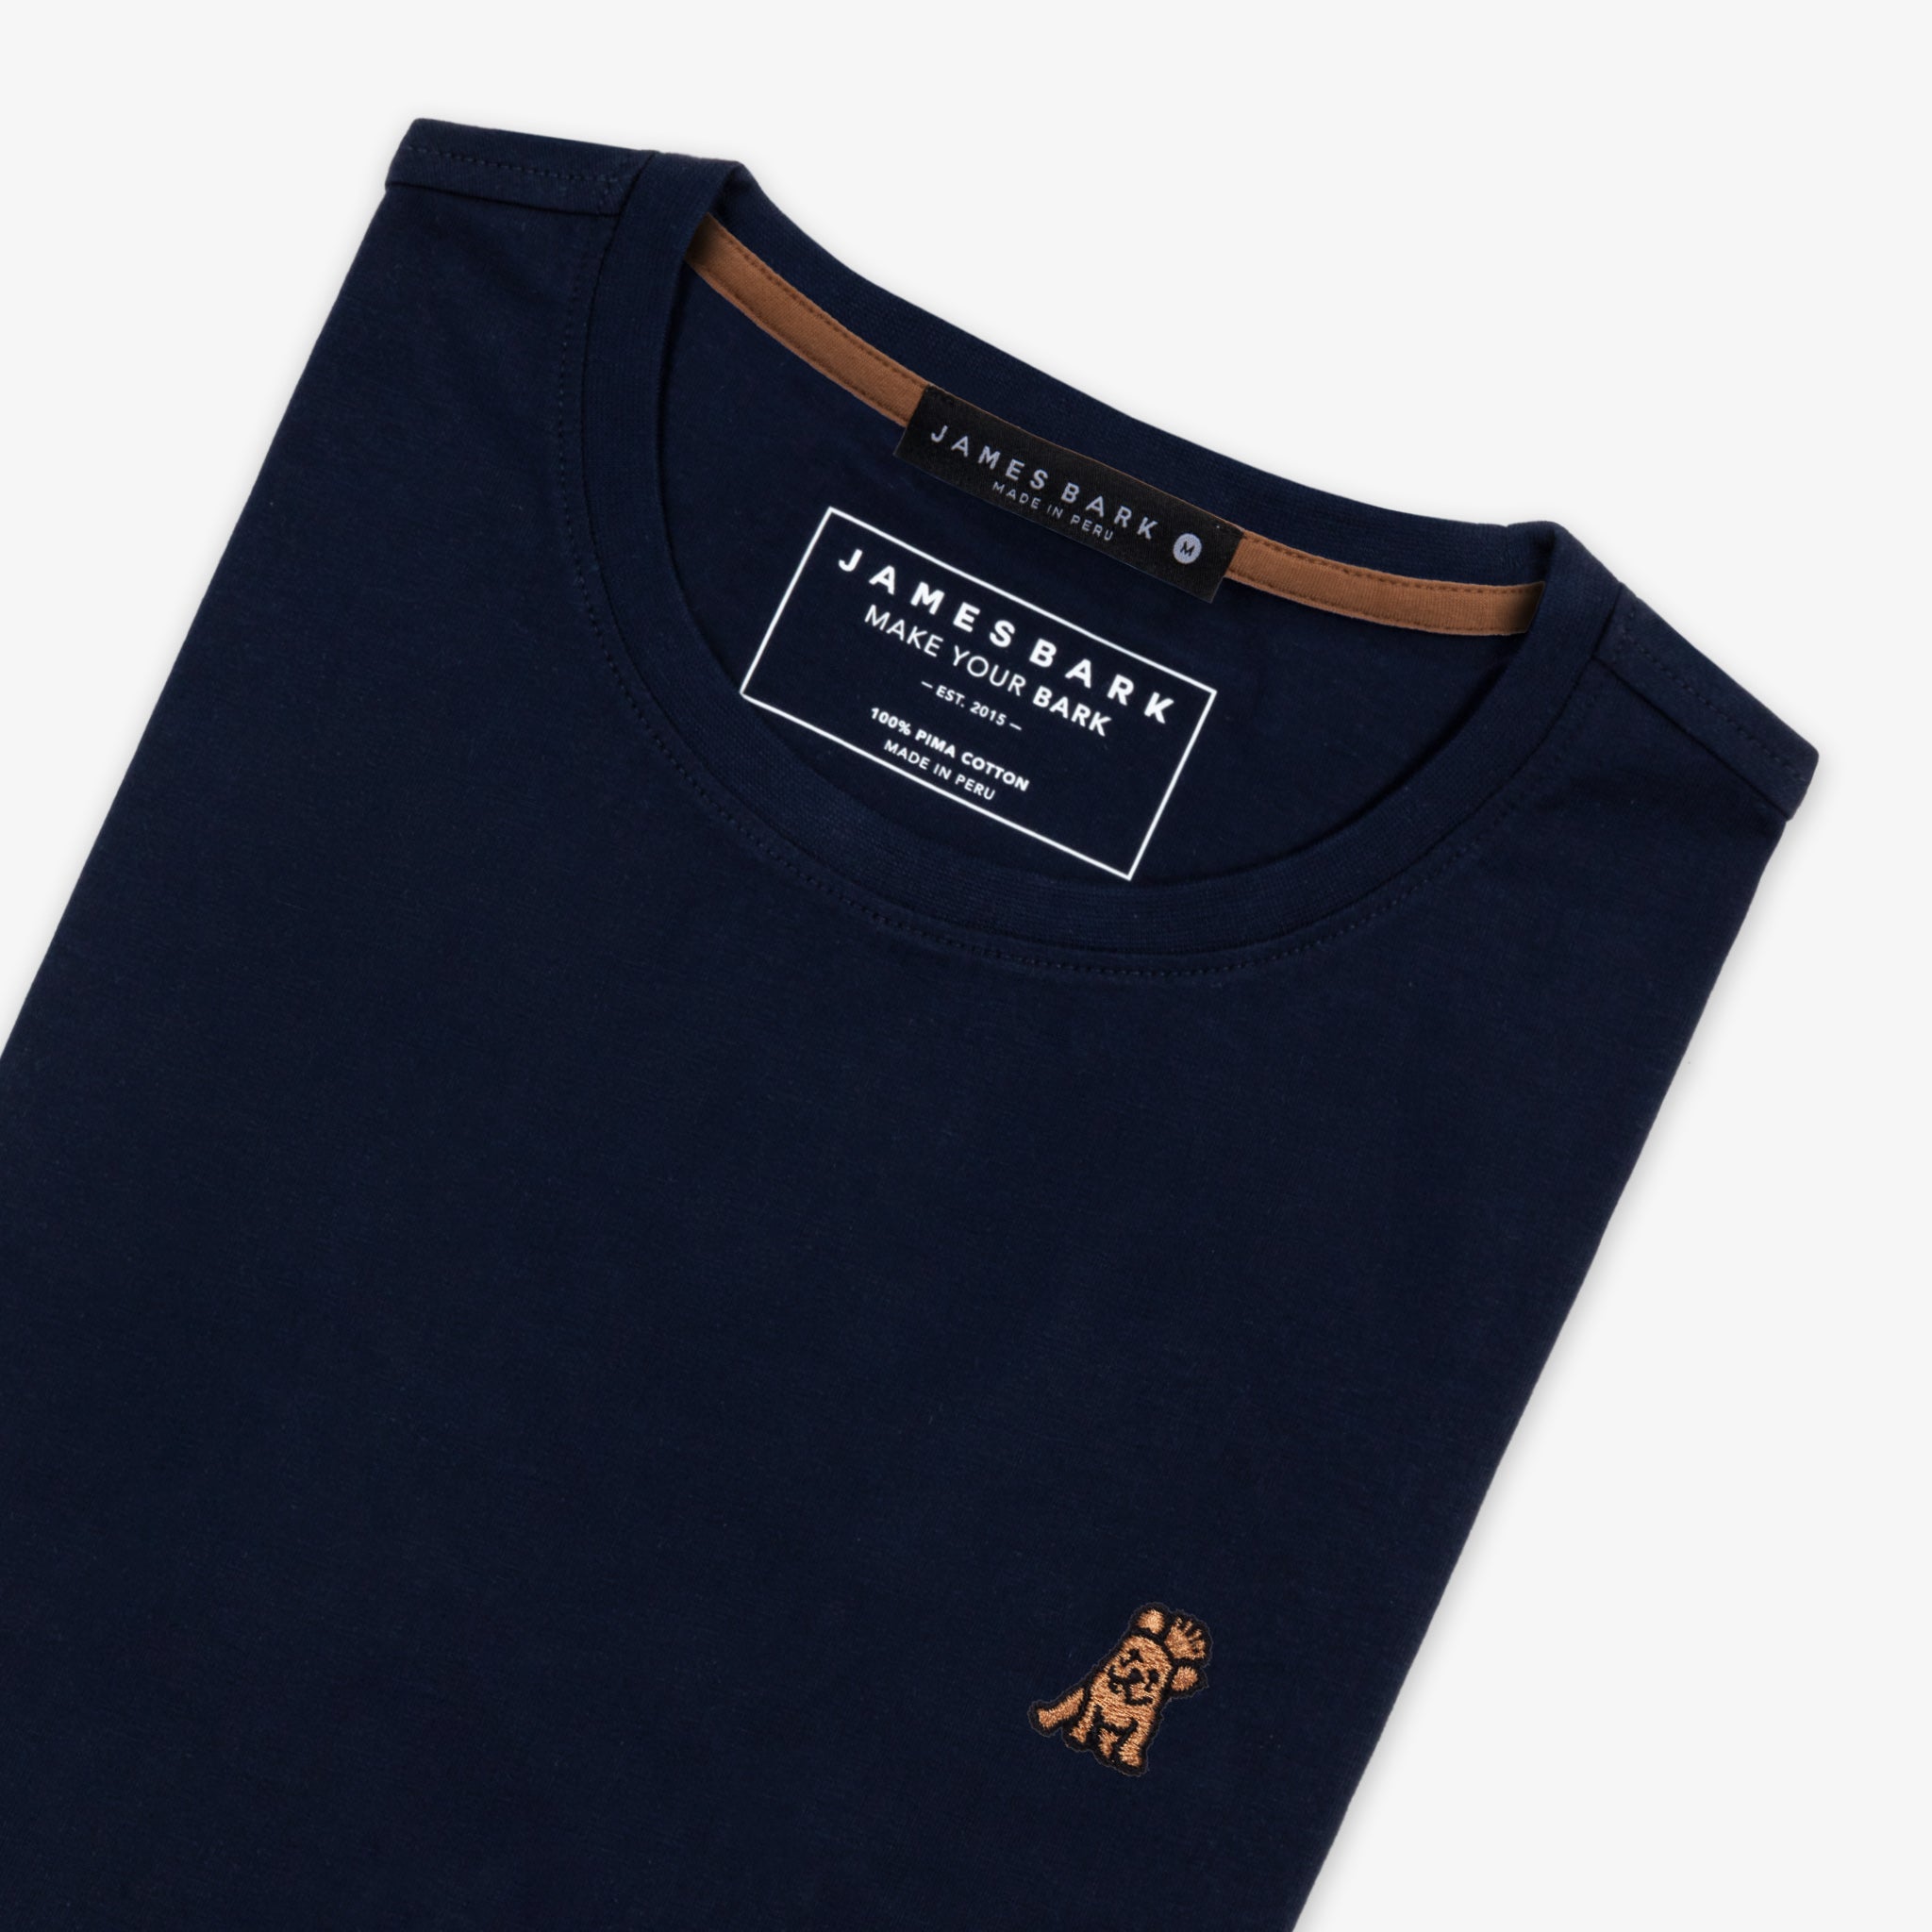 Men's Navy Special Edition Jersey T-Shirt - JAMES BARK